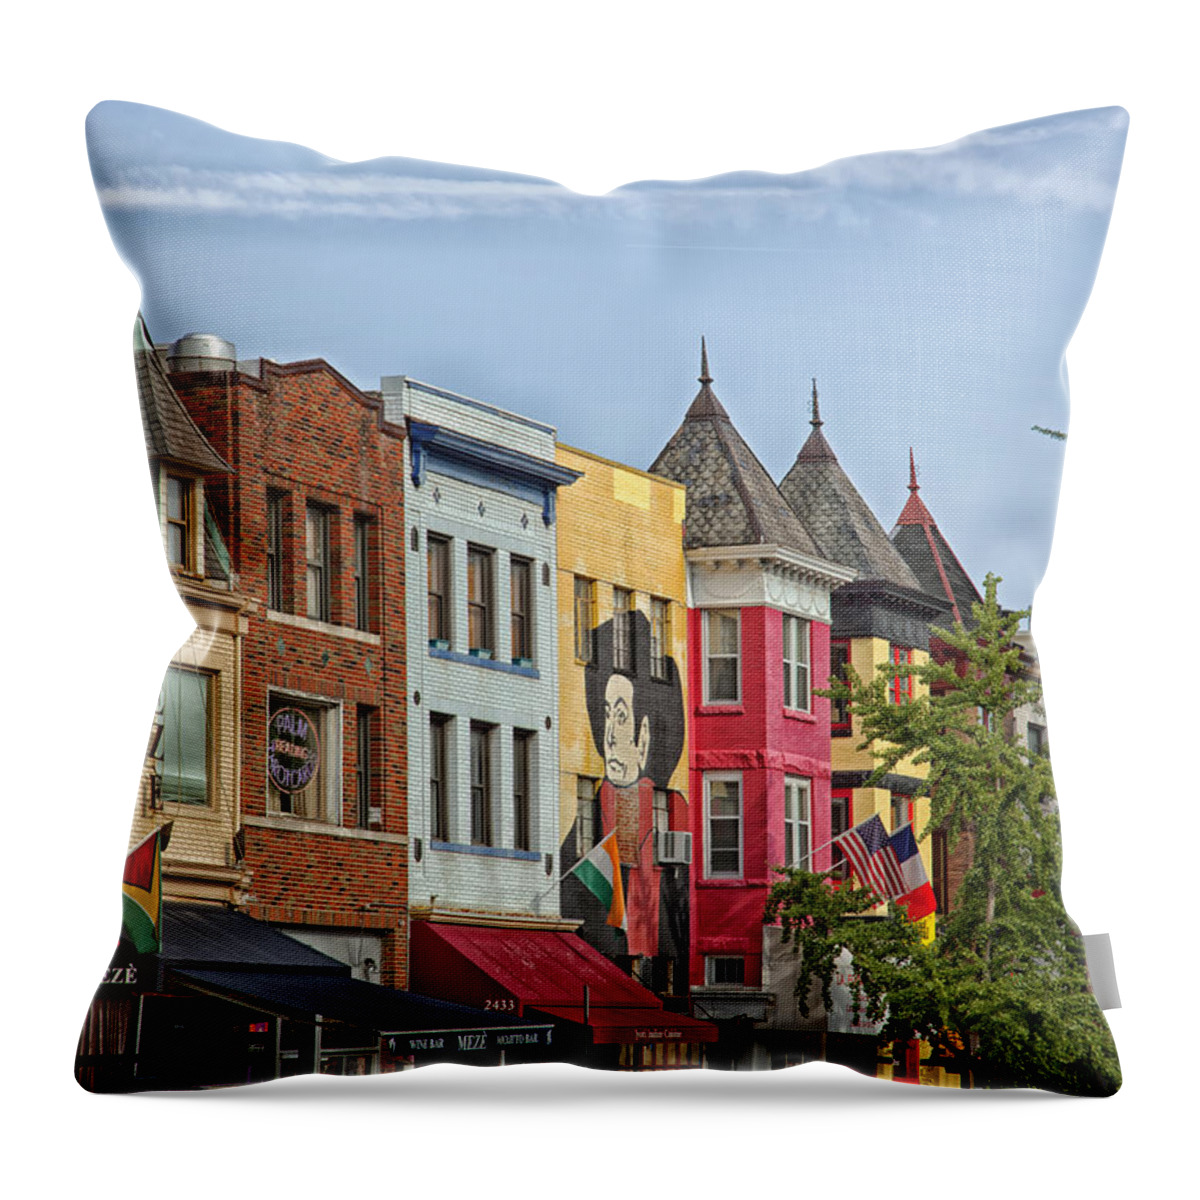 Washington D.c. Throw Pillow featuring the photograph Adams Morgan Neighborhood in Washington D.C. by Mountain Dreams